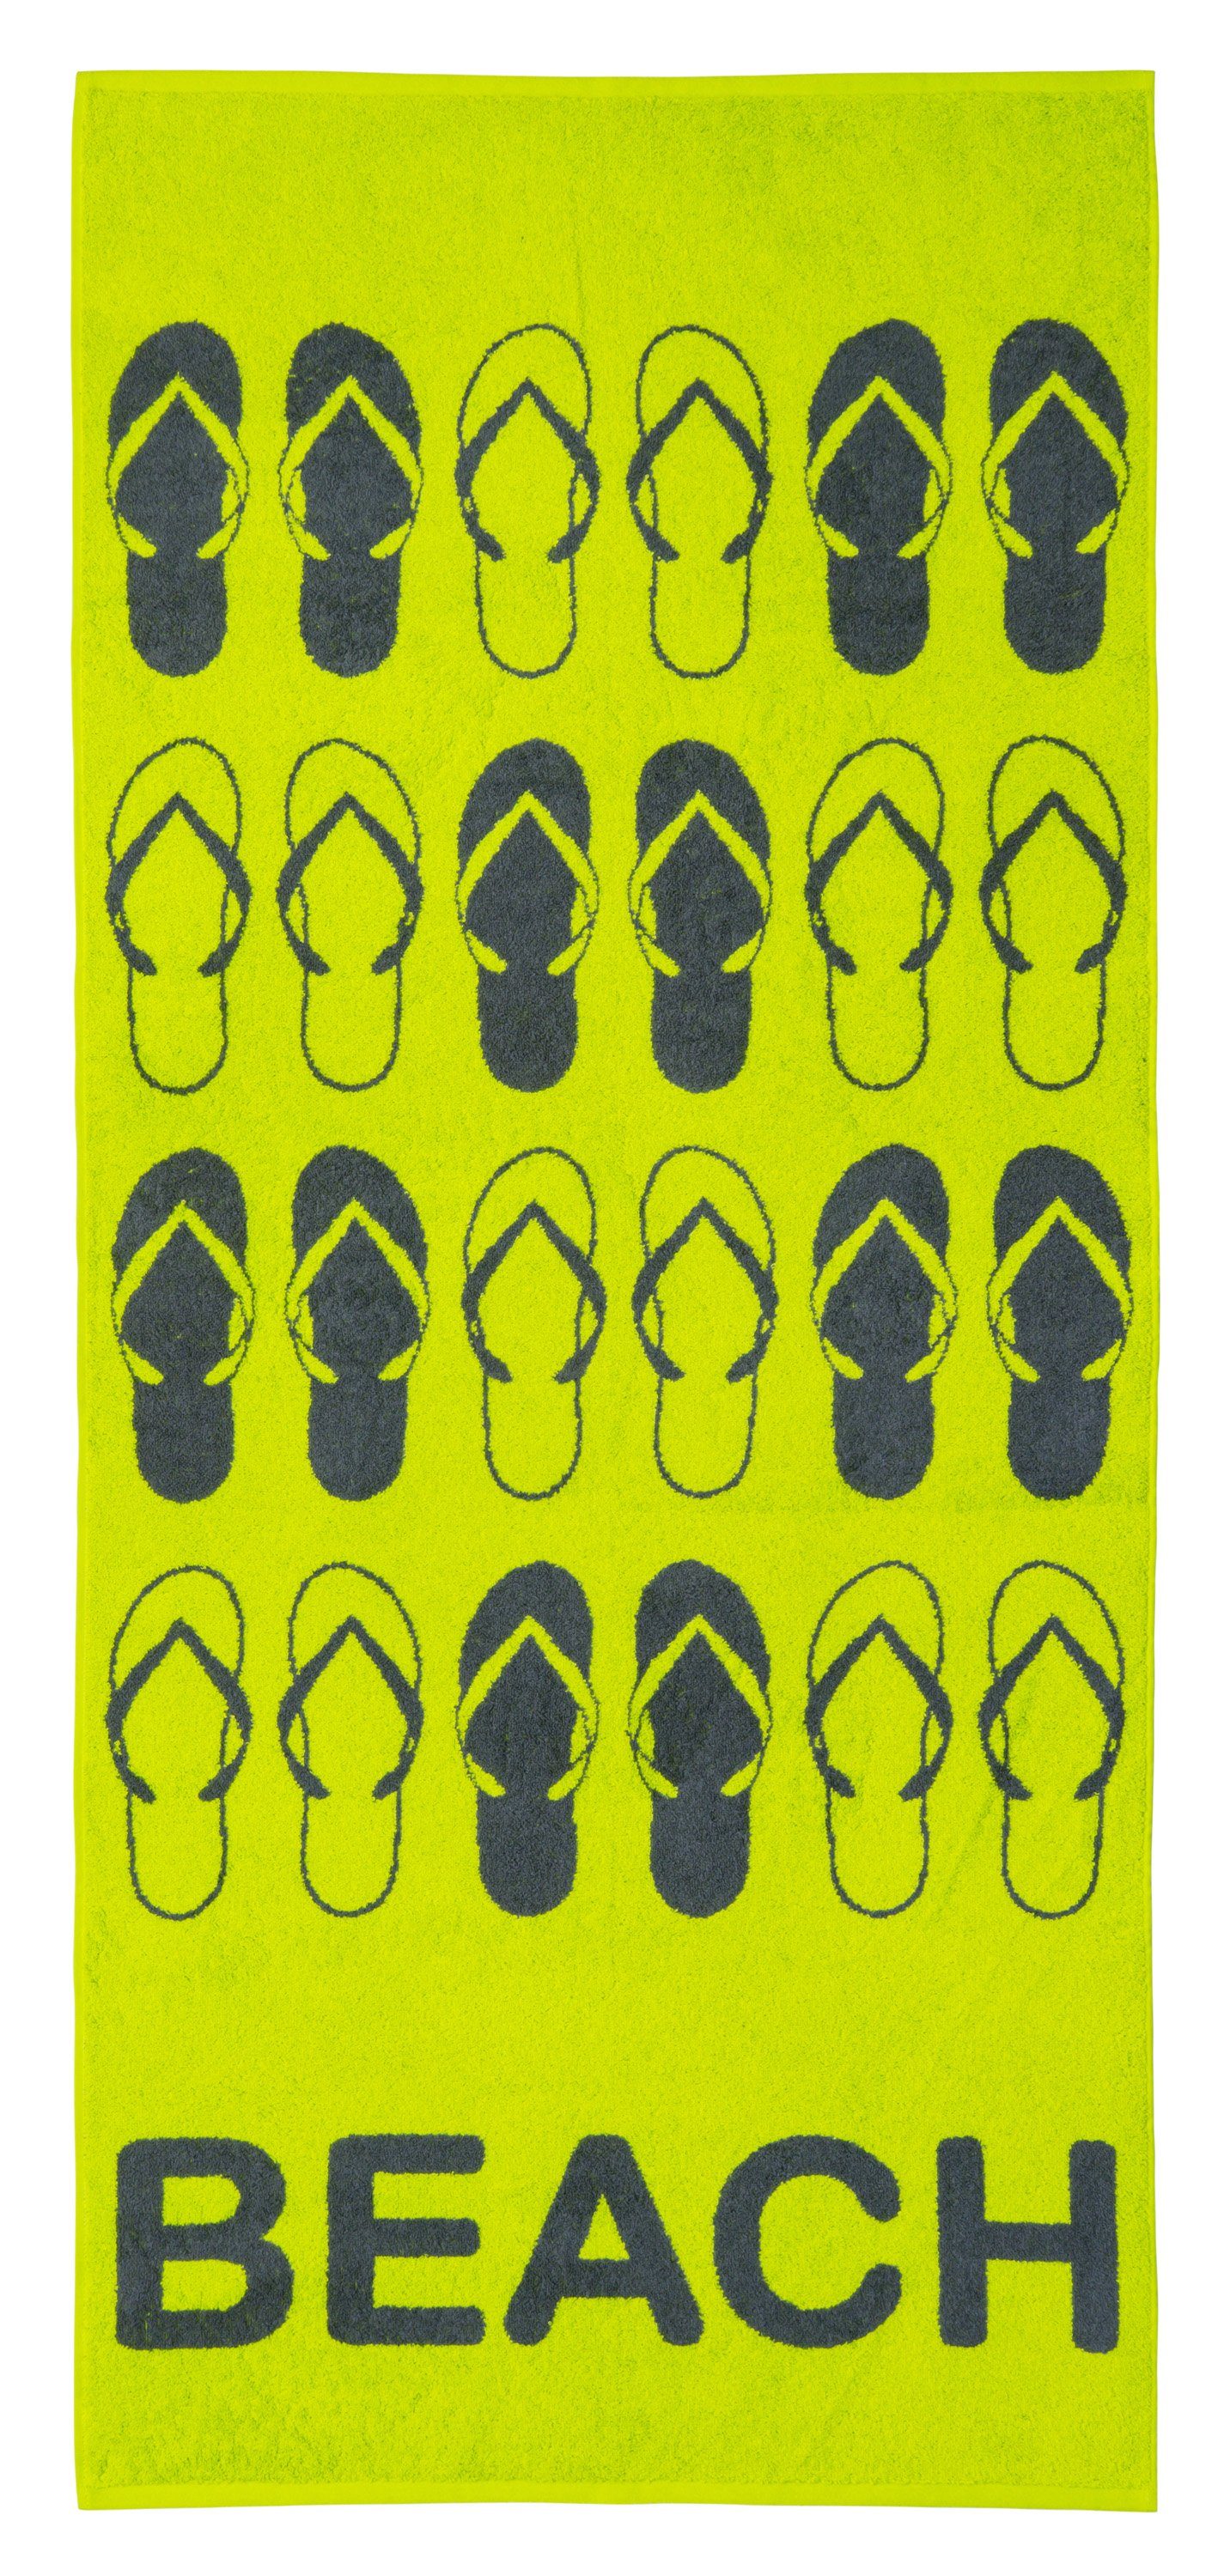 Lashuma Strandtuch Flip Flops, Duschtuch weich, Badehandtuch 70x160 cm